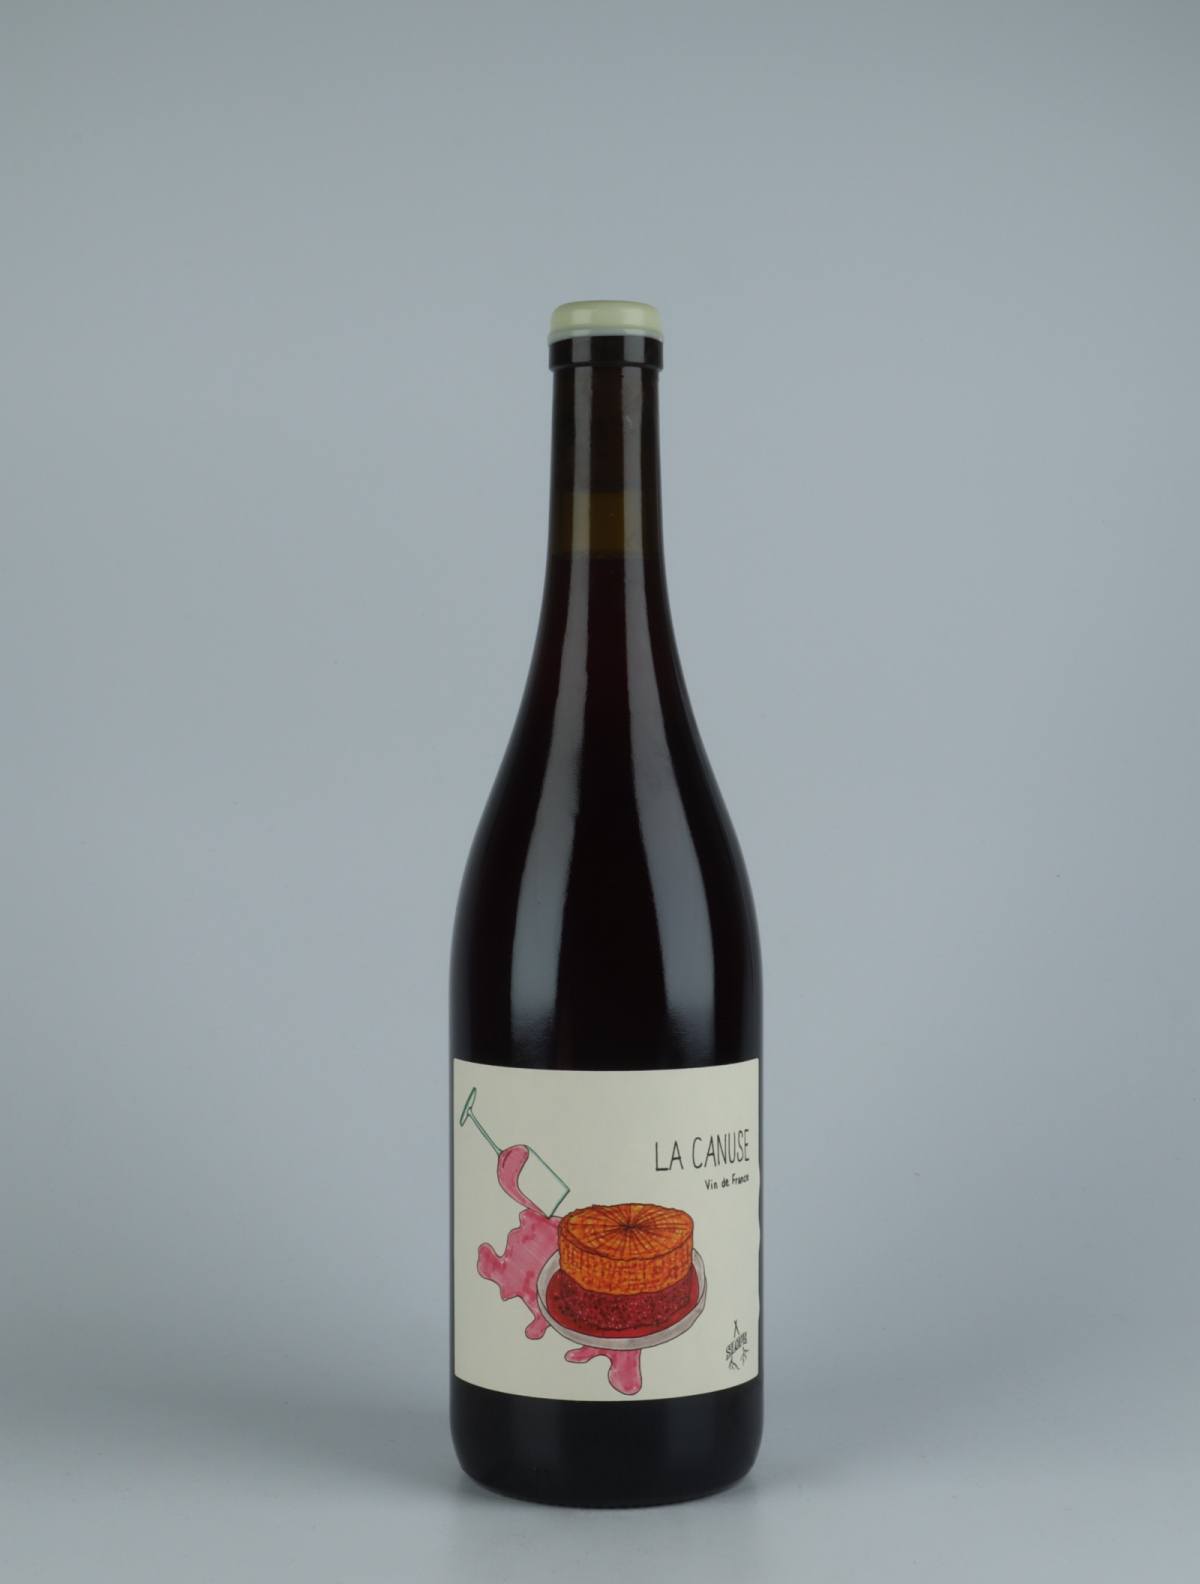 A bottle 2020 La Canuse Red wine from , Rhône in France